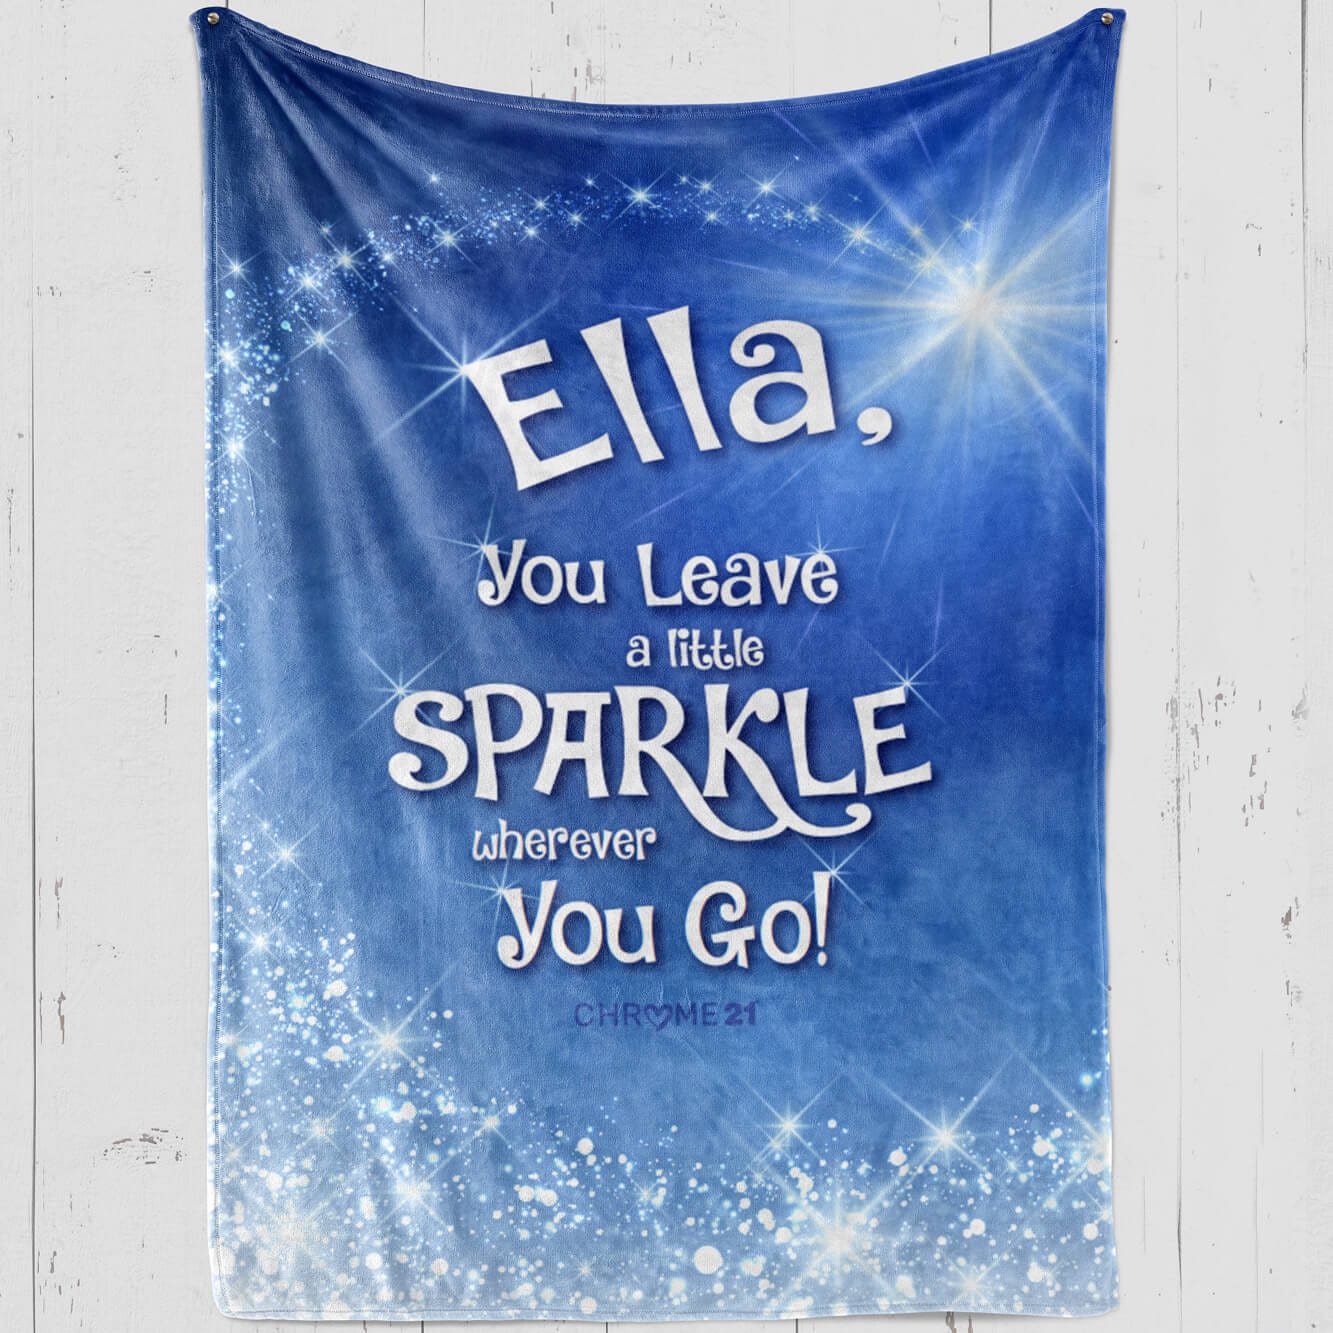 Leave a little sparkle wherever you go